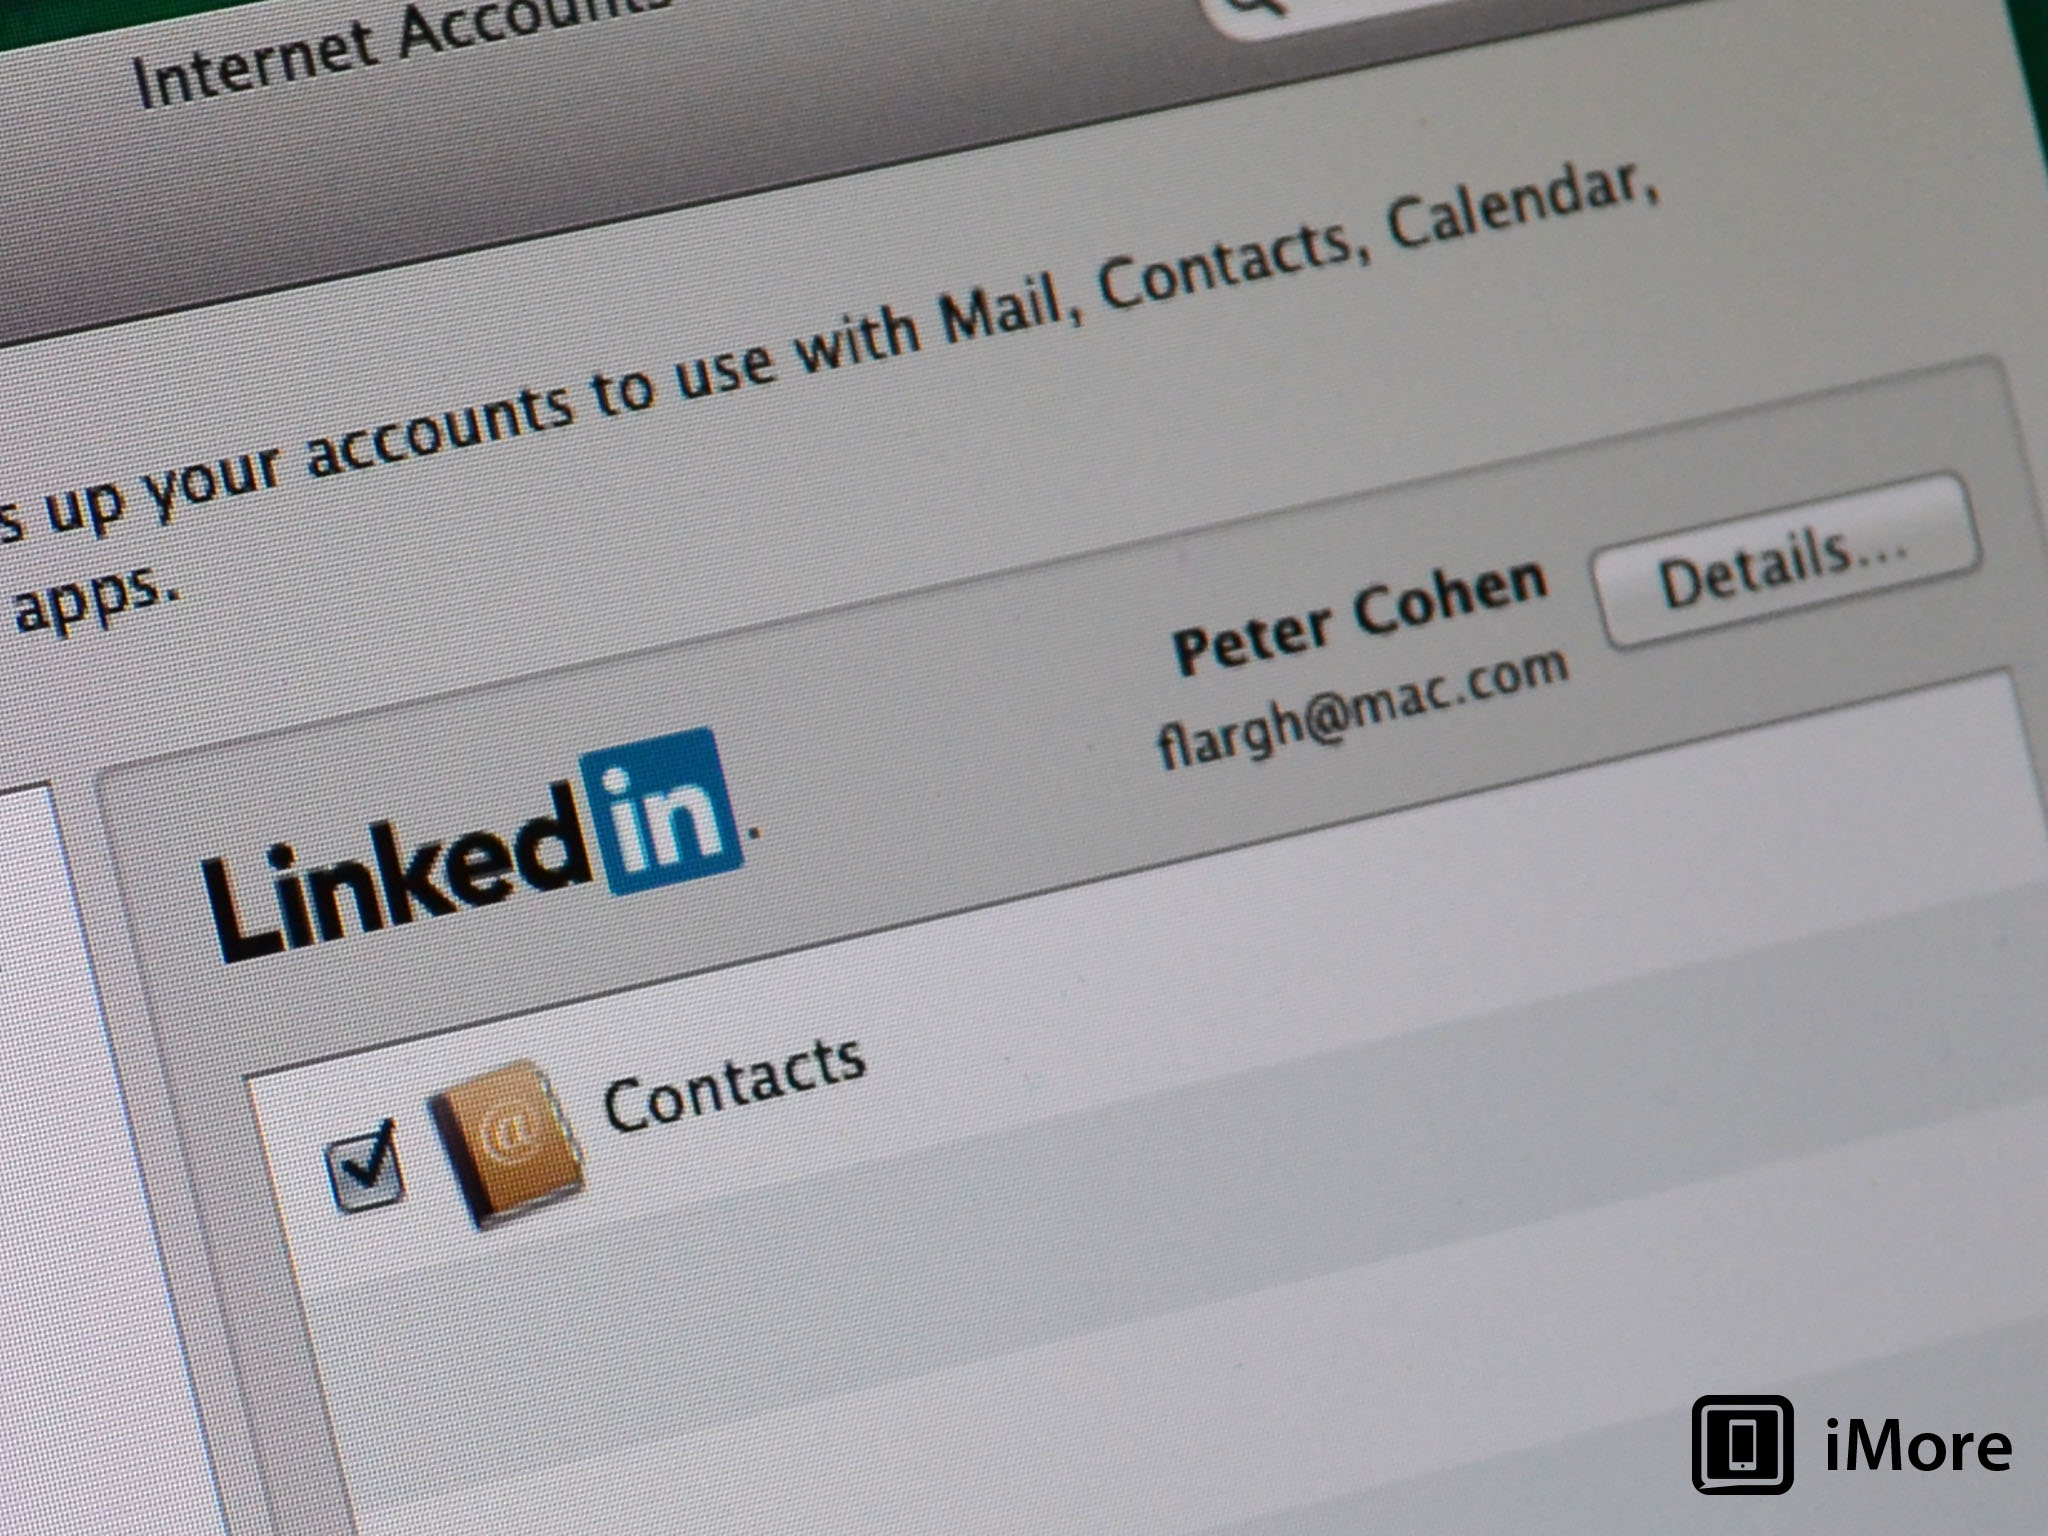 OS X Mavericks Preview: easily access your LinkedIn account